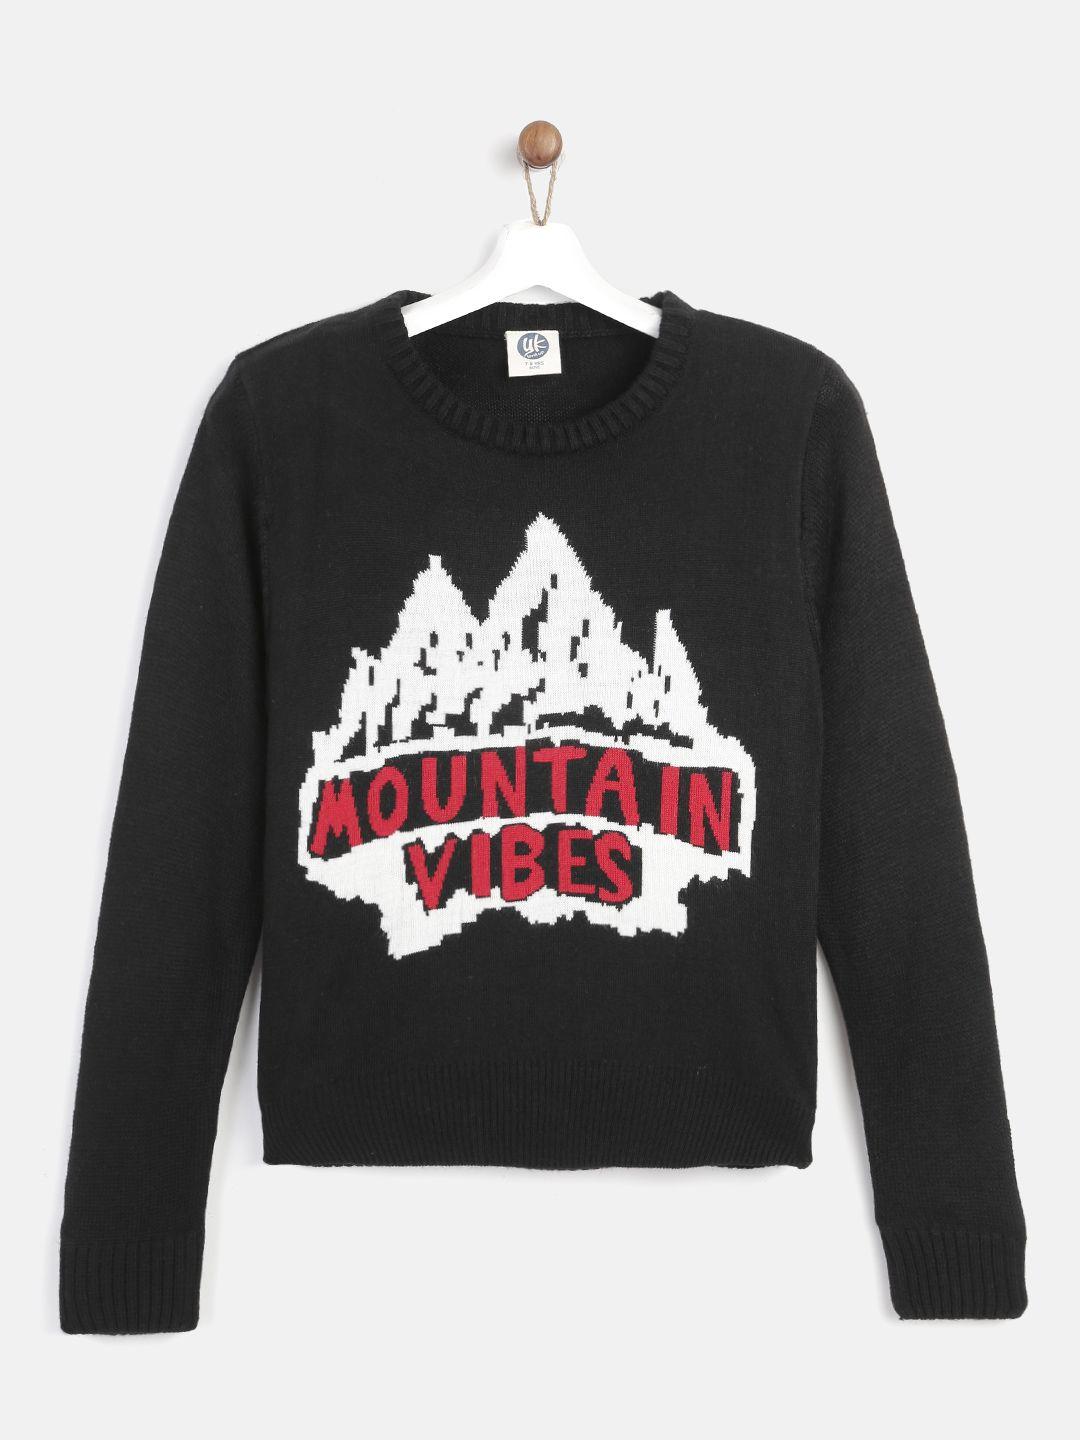 yk boys black & white self design sweater